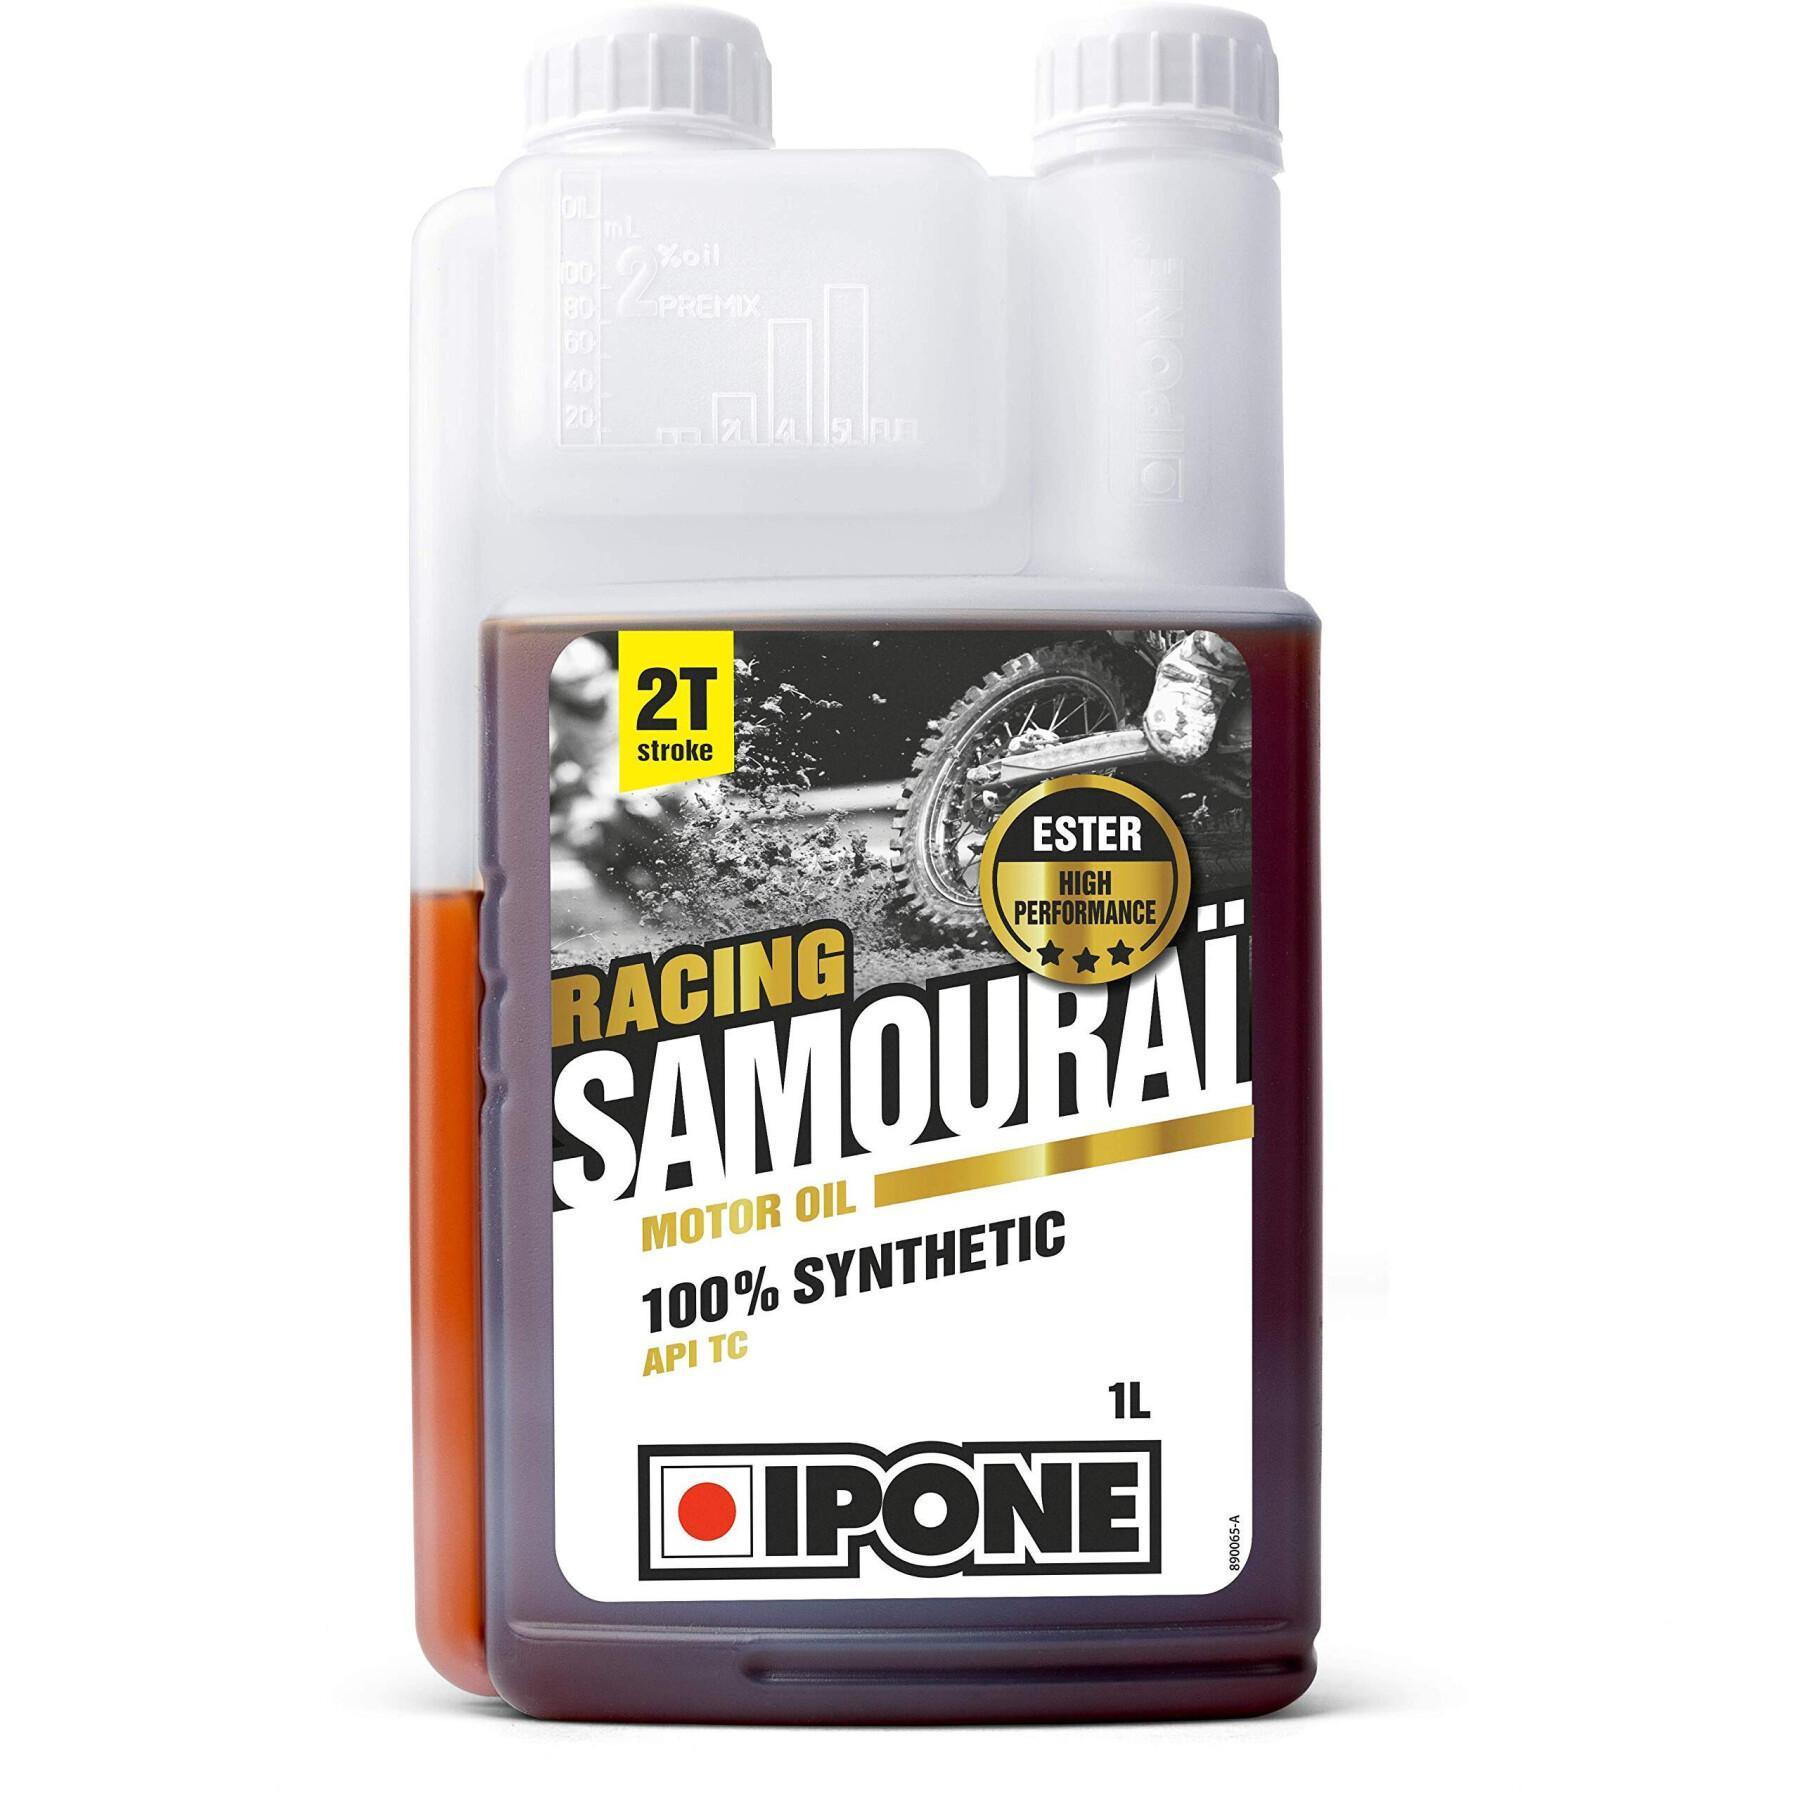 Motorcycle oil ipone samourai racing